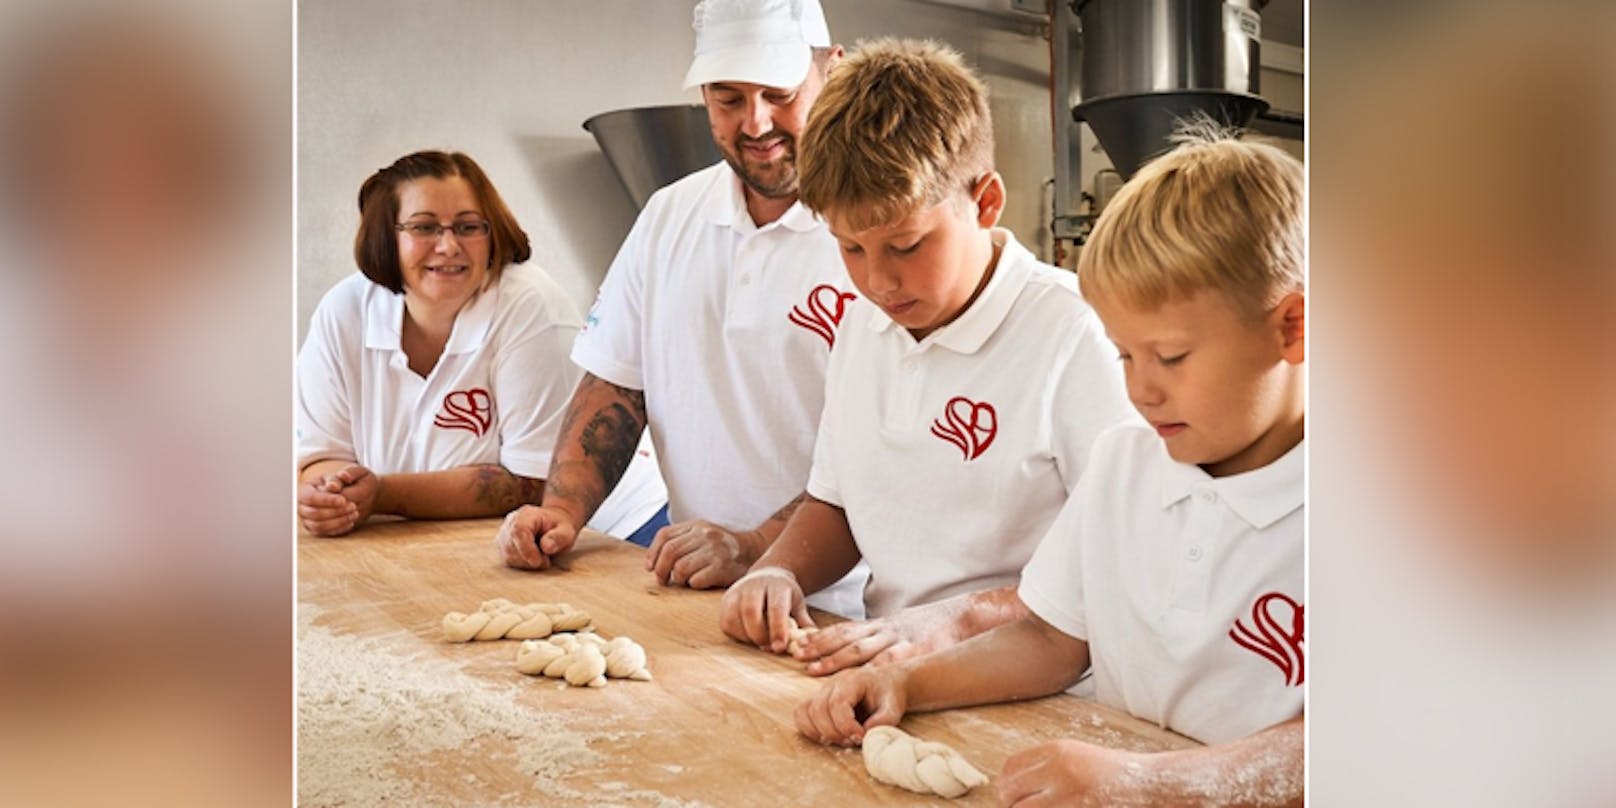 Posting ging viral, jetzt 40 Bewerber für Bäckerei-Jobs